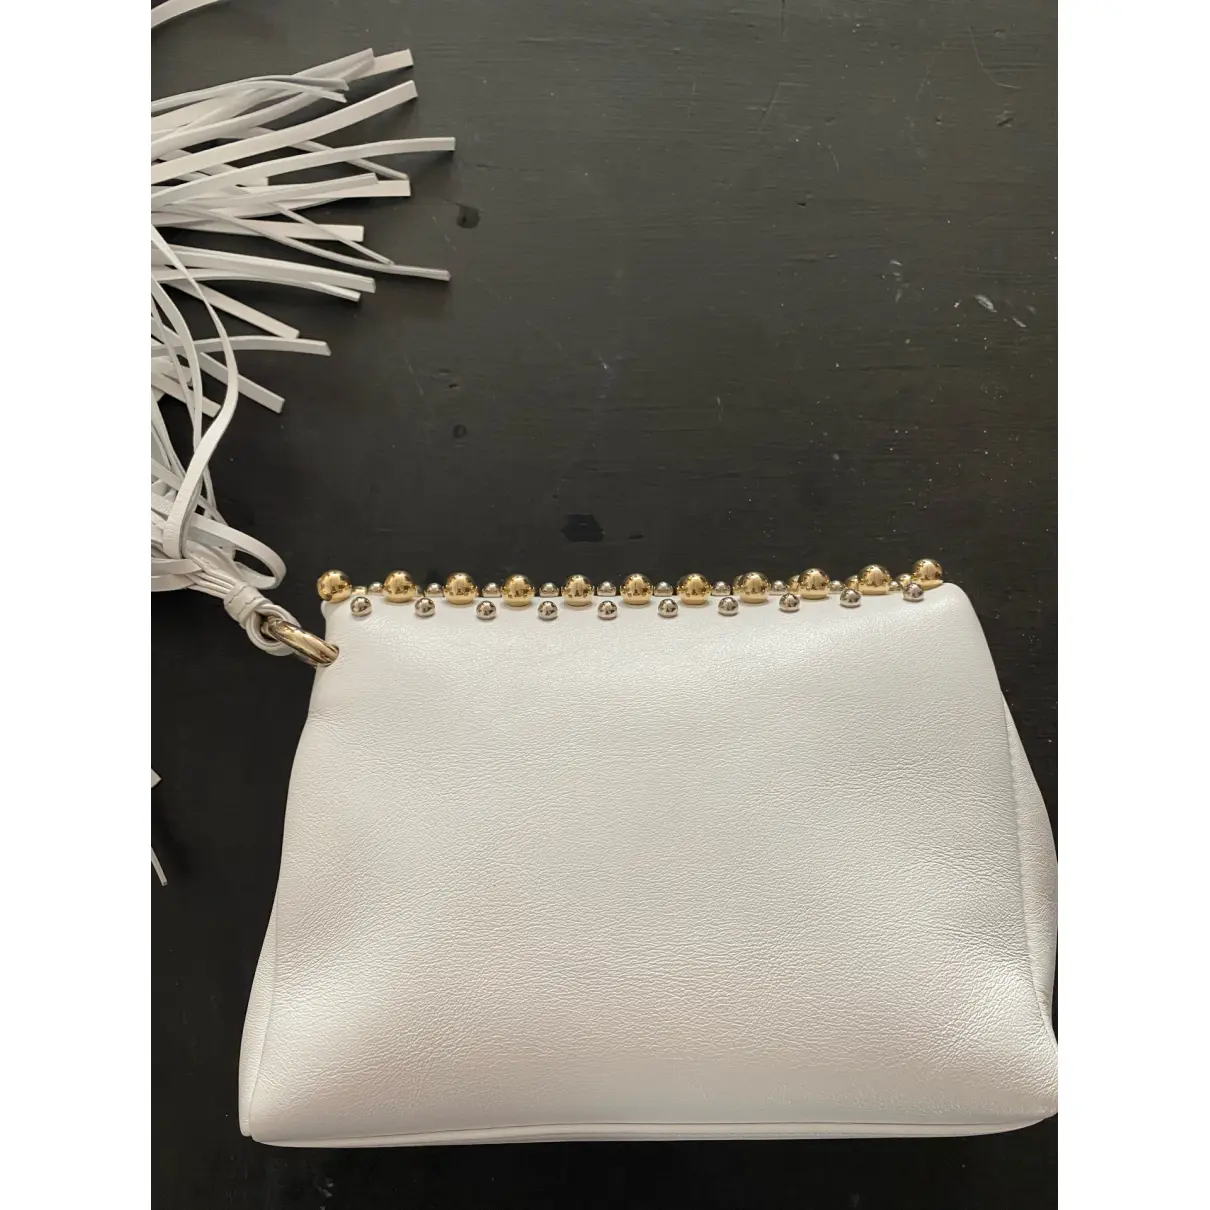 Buy Sara Battaglia Leather clutch bag online